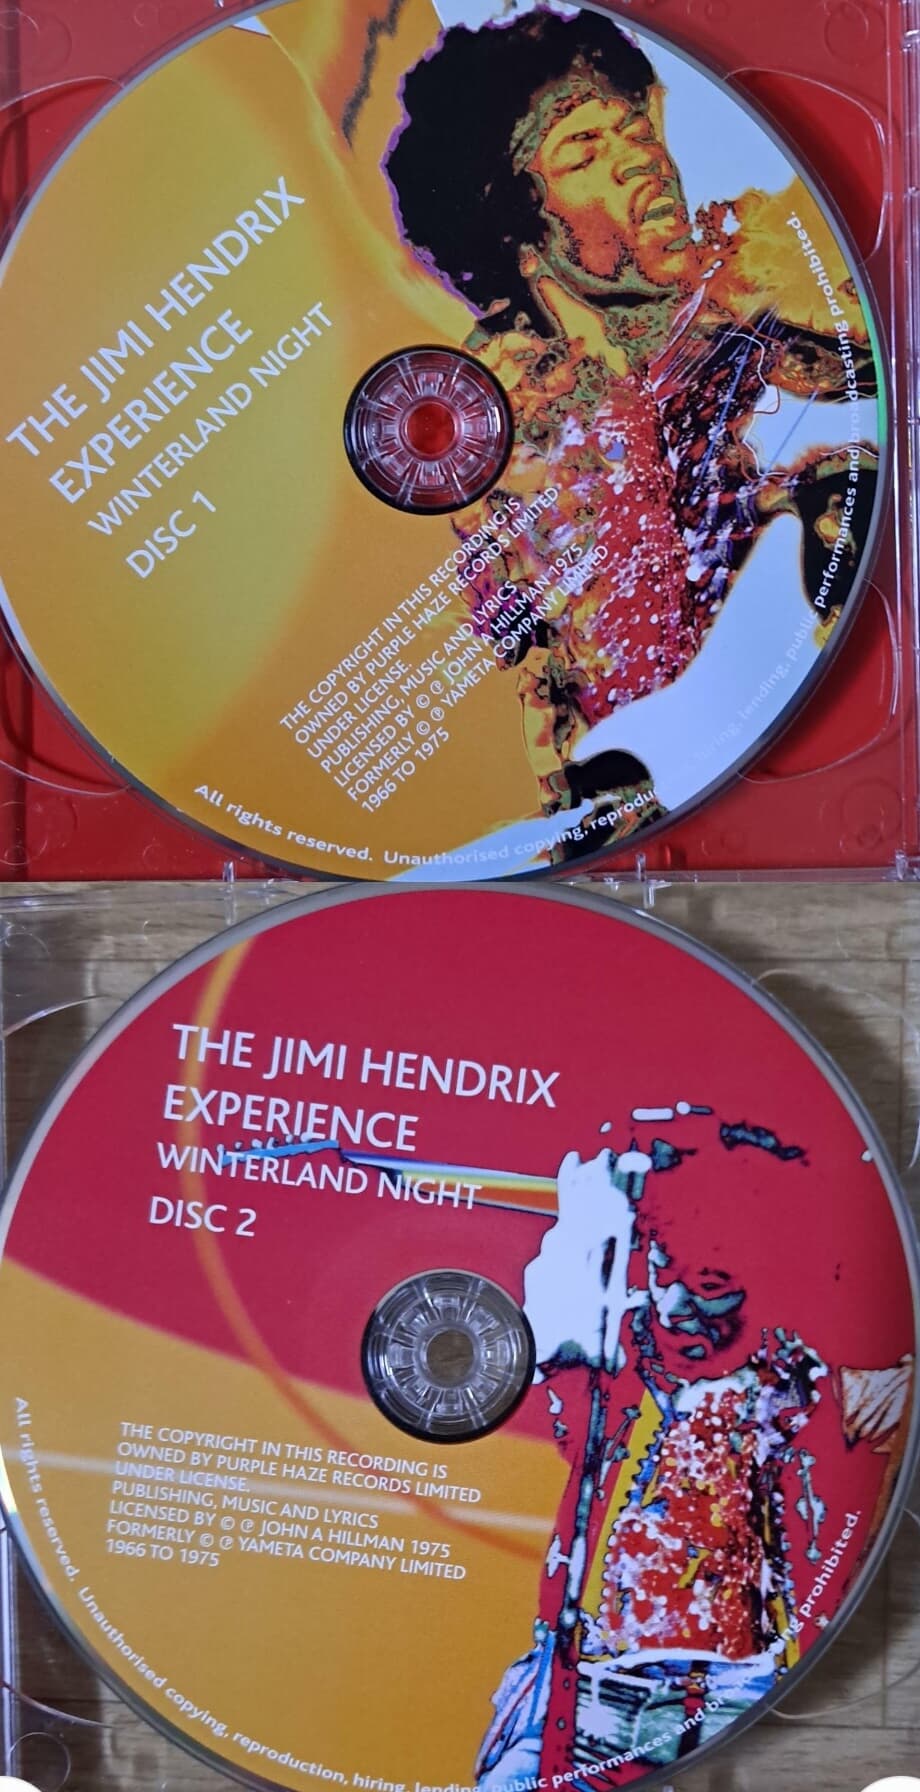 THE JIMI HENDRIX EXPERIENCE/ WINTERLAND NIGHT 2CD